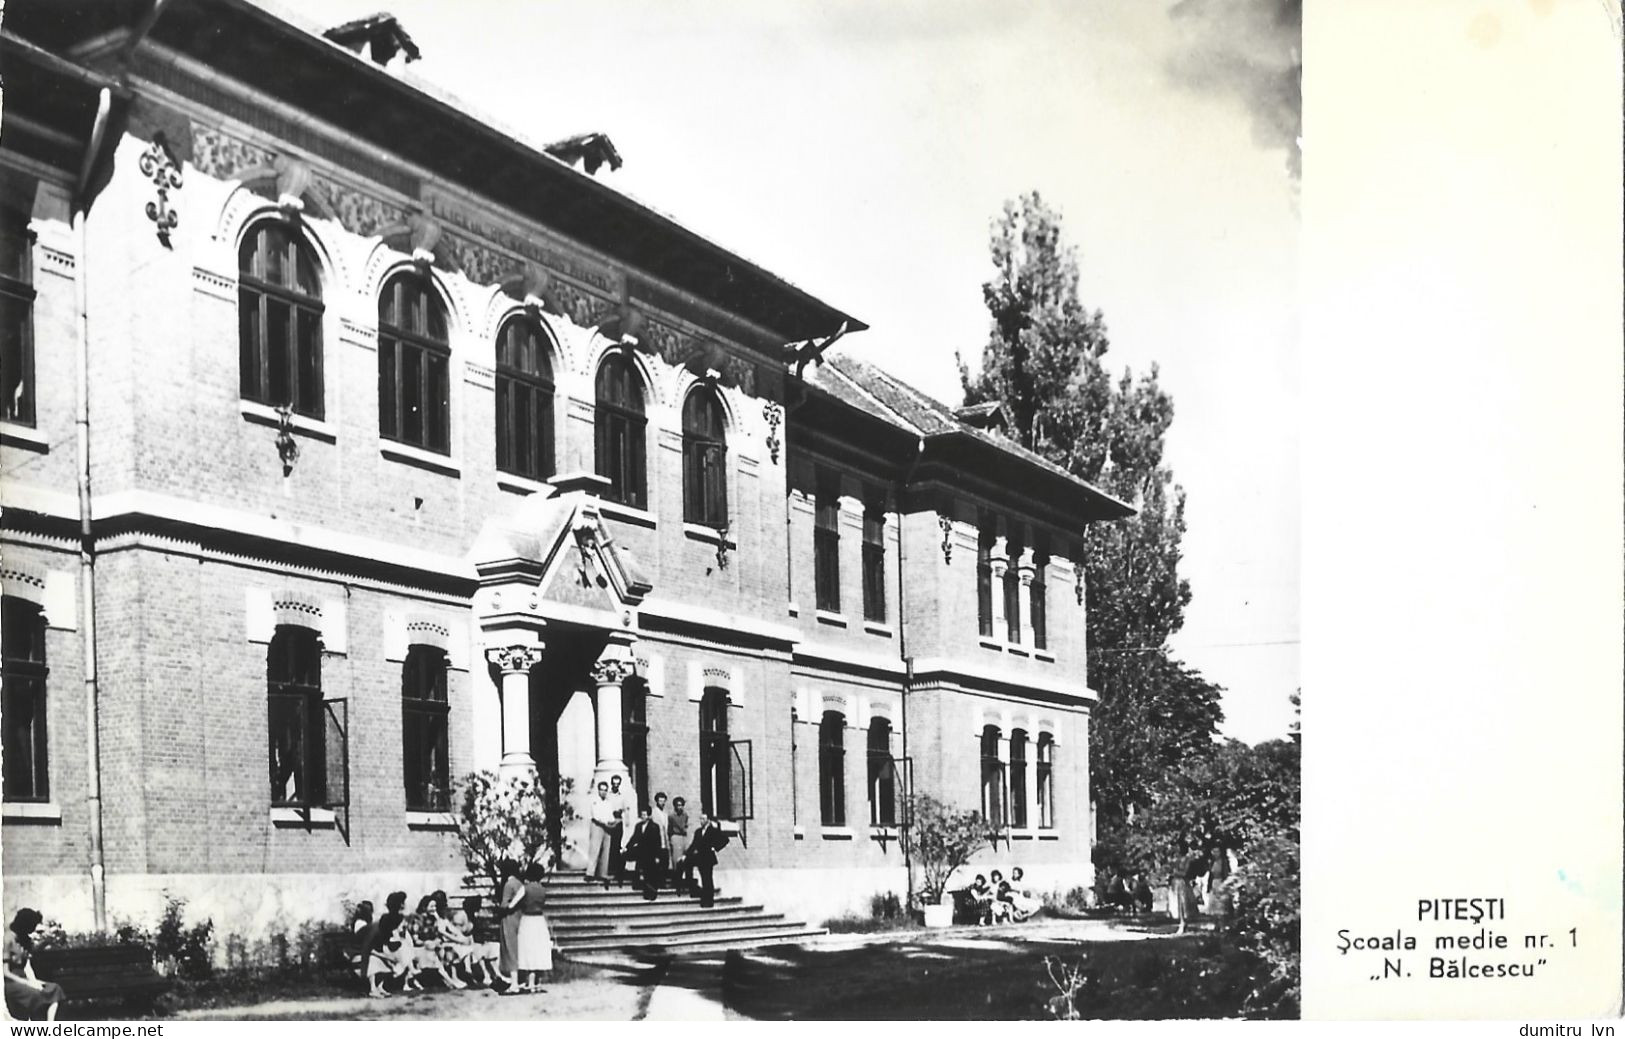 ROMANIA PITESTI - SECONDARY SCHOOL NO. 1 ''N. BALCESCU'', BUILDING, ARCHITECTURE, PEOPLE ON THE BENCH - Segnatasse